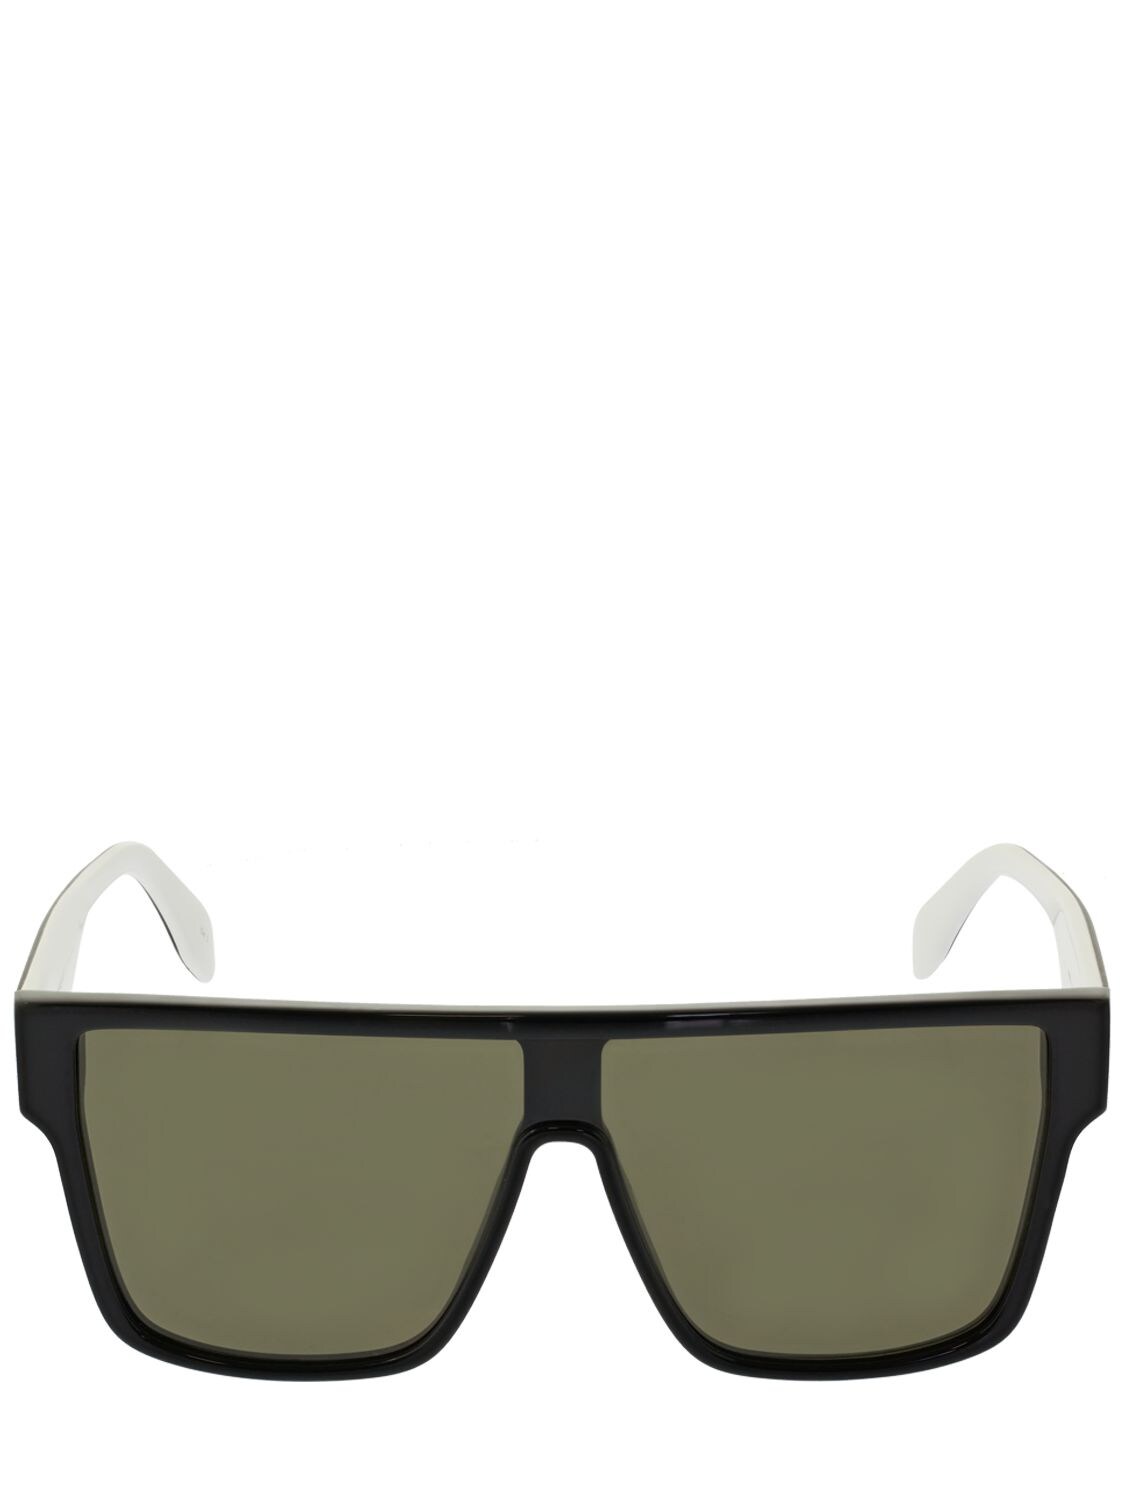 Am0354s Sunglasses